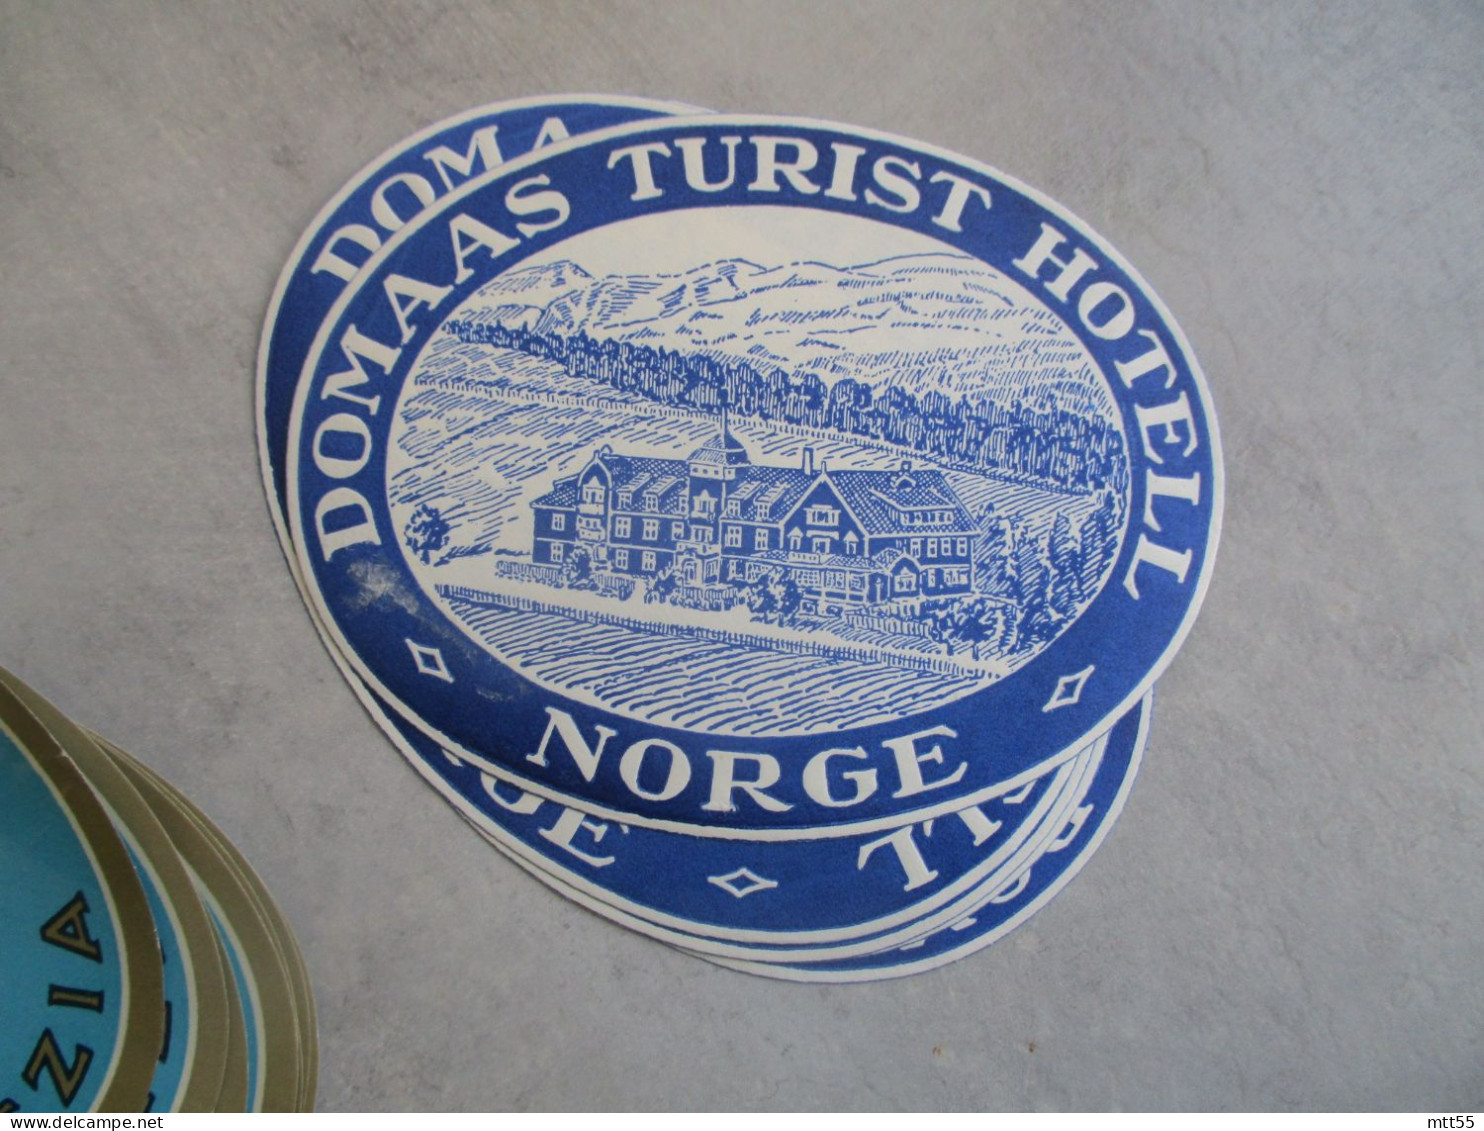 LOT DE 5 ETIQUETTE HOTEL HOTEL DOMAAS TURIST HOTEL NORGE NORVEGE - Hotelaufkleber